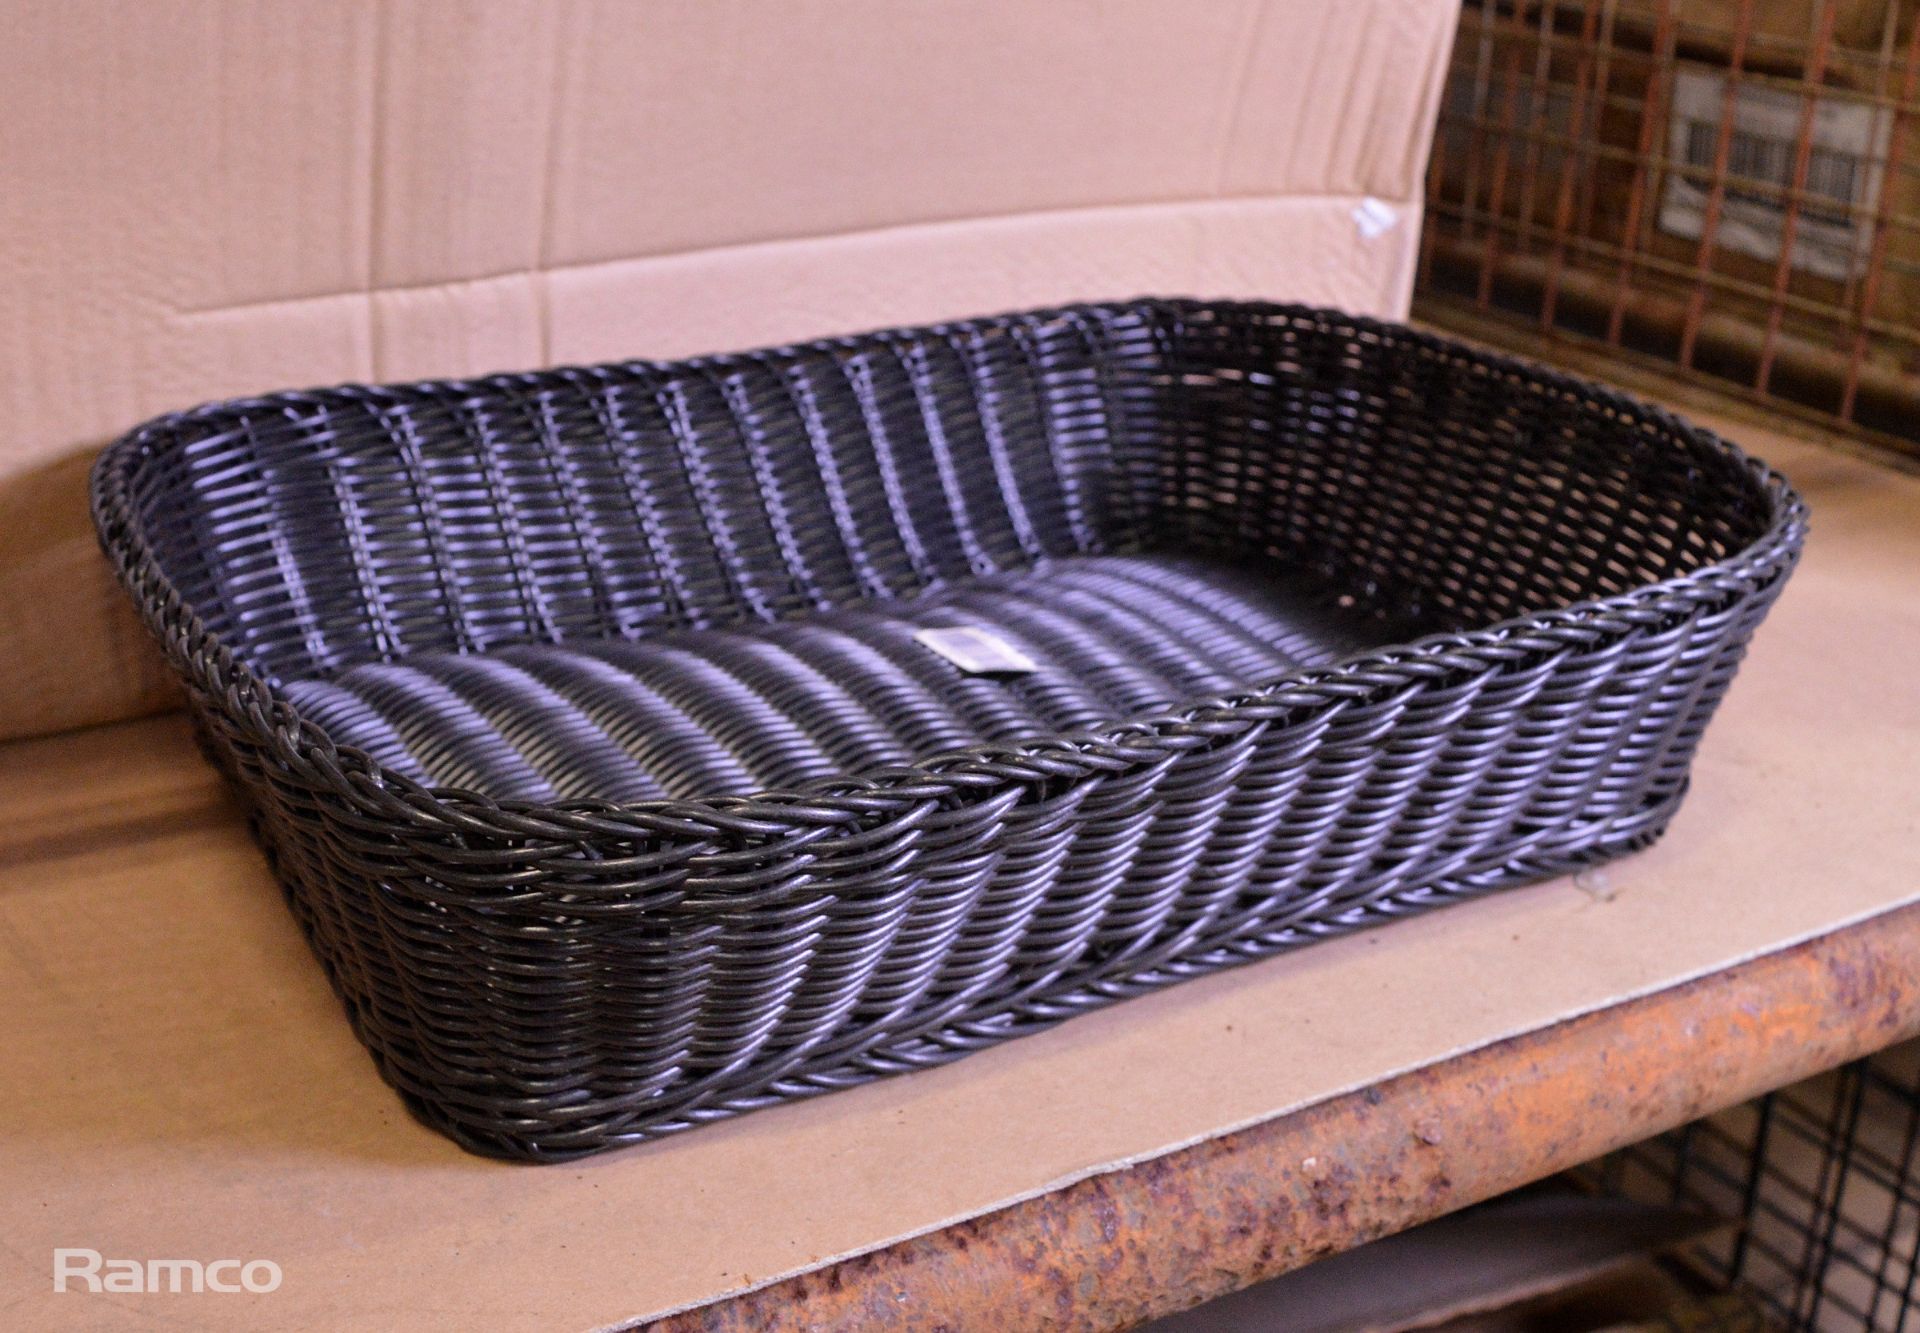 24x Transworld Weaved Bread Baskets - Image 2 of 3